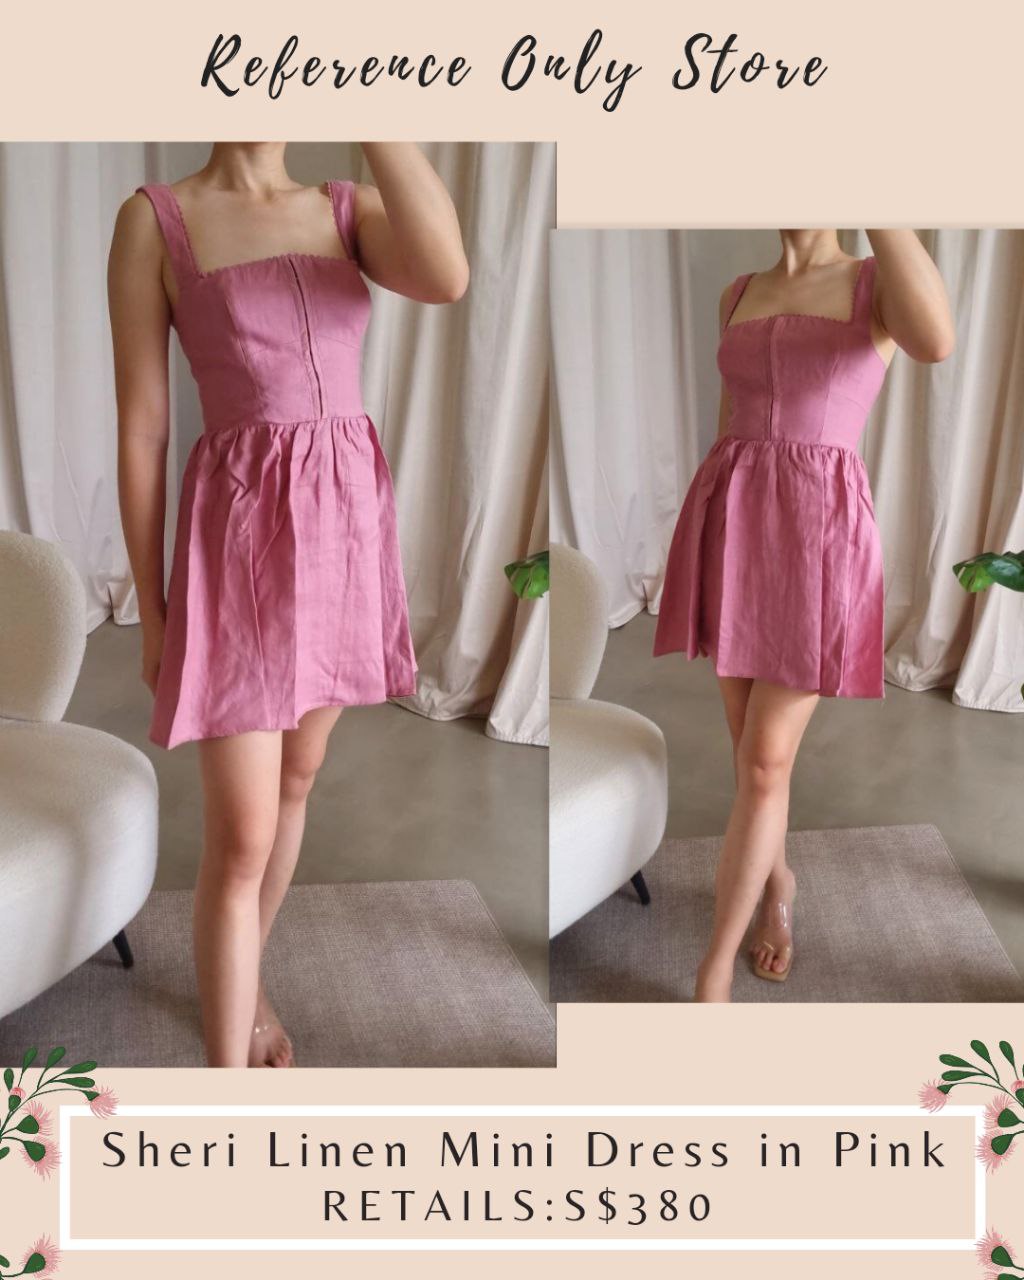 Back in!  Ref Sheri Linen Mini Dress